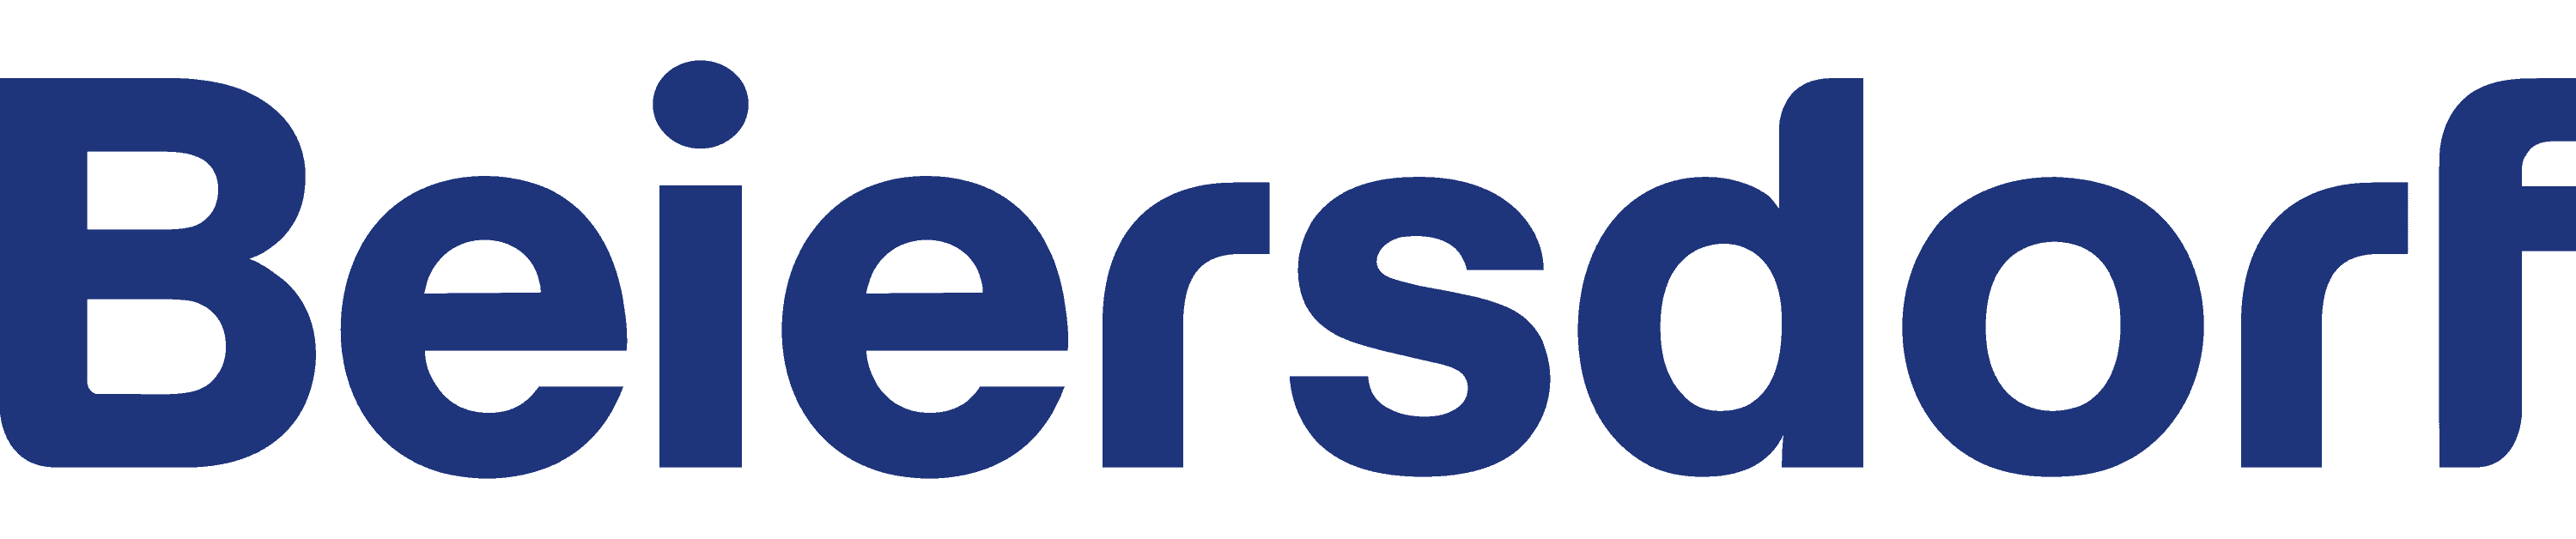 beiersdorf logo